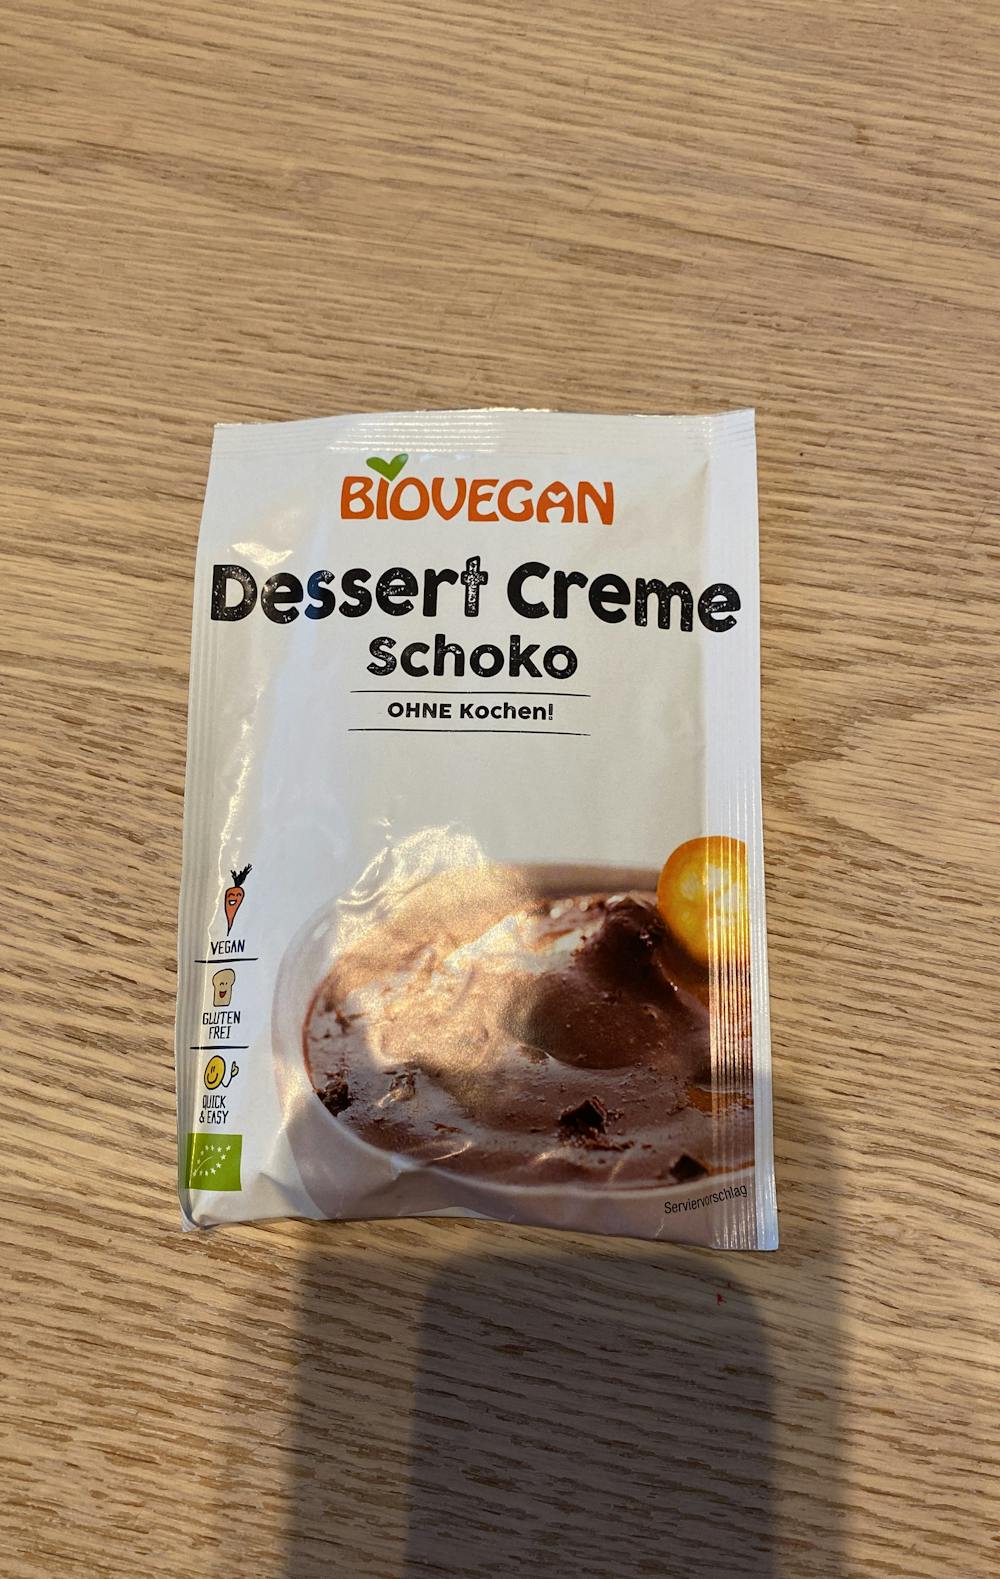 Dessert creme schoko, Biovegan